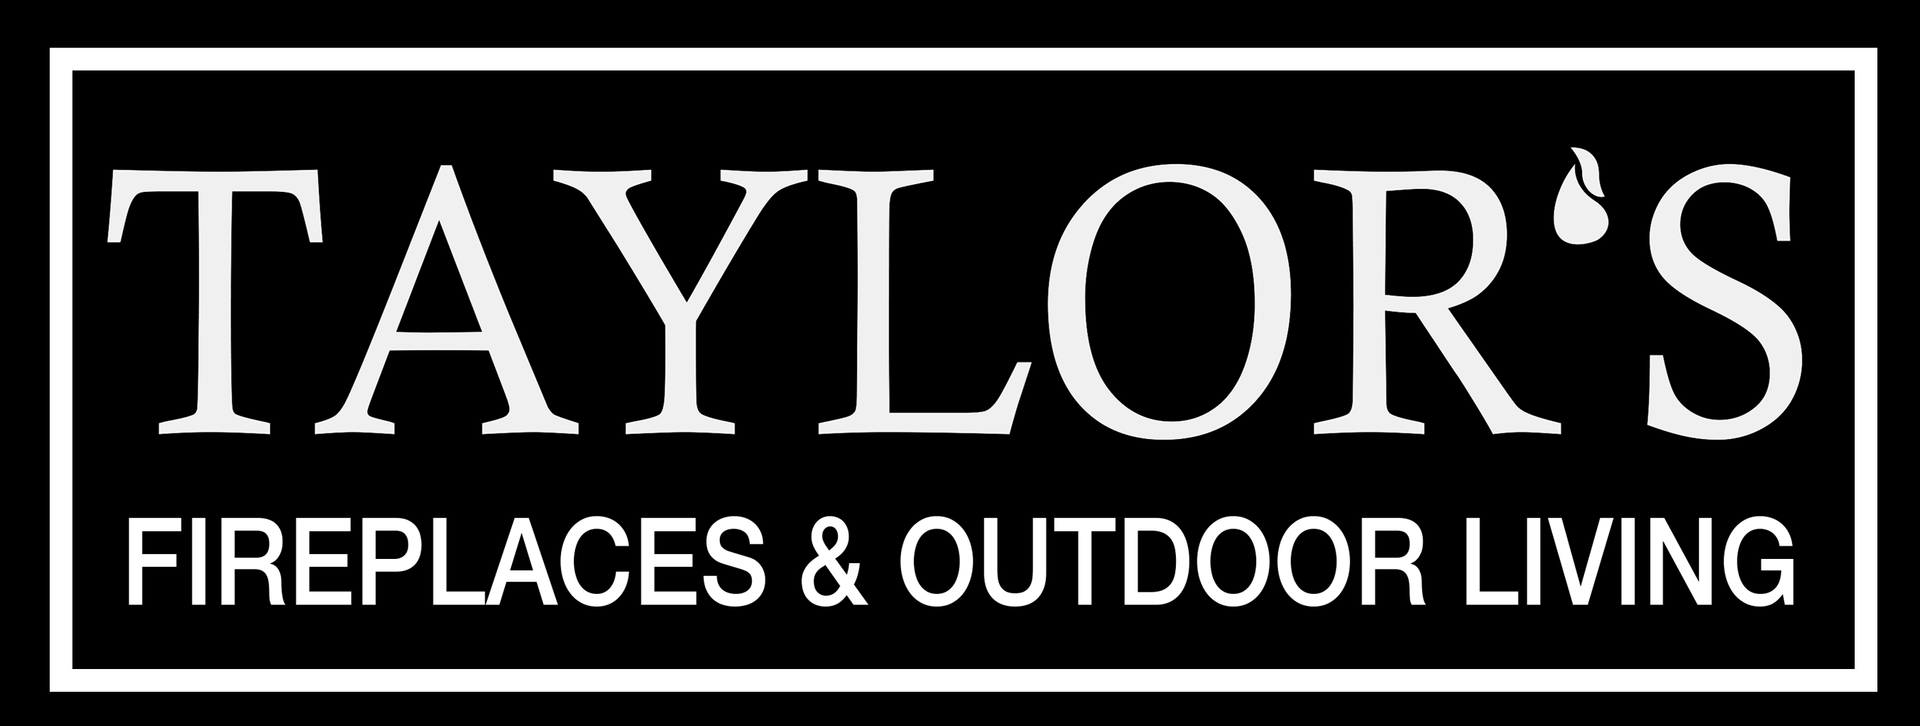 Taylor's Hearth & Leisure logo